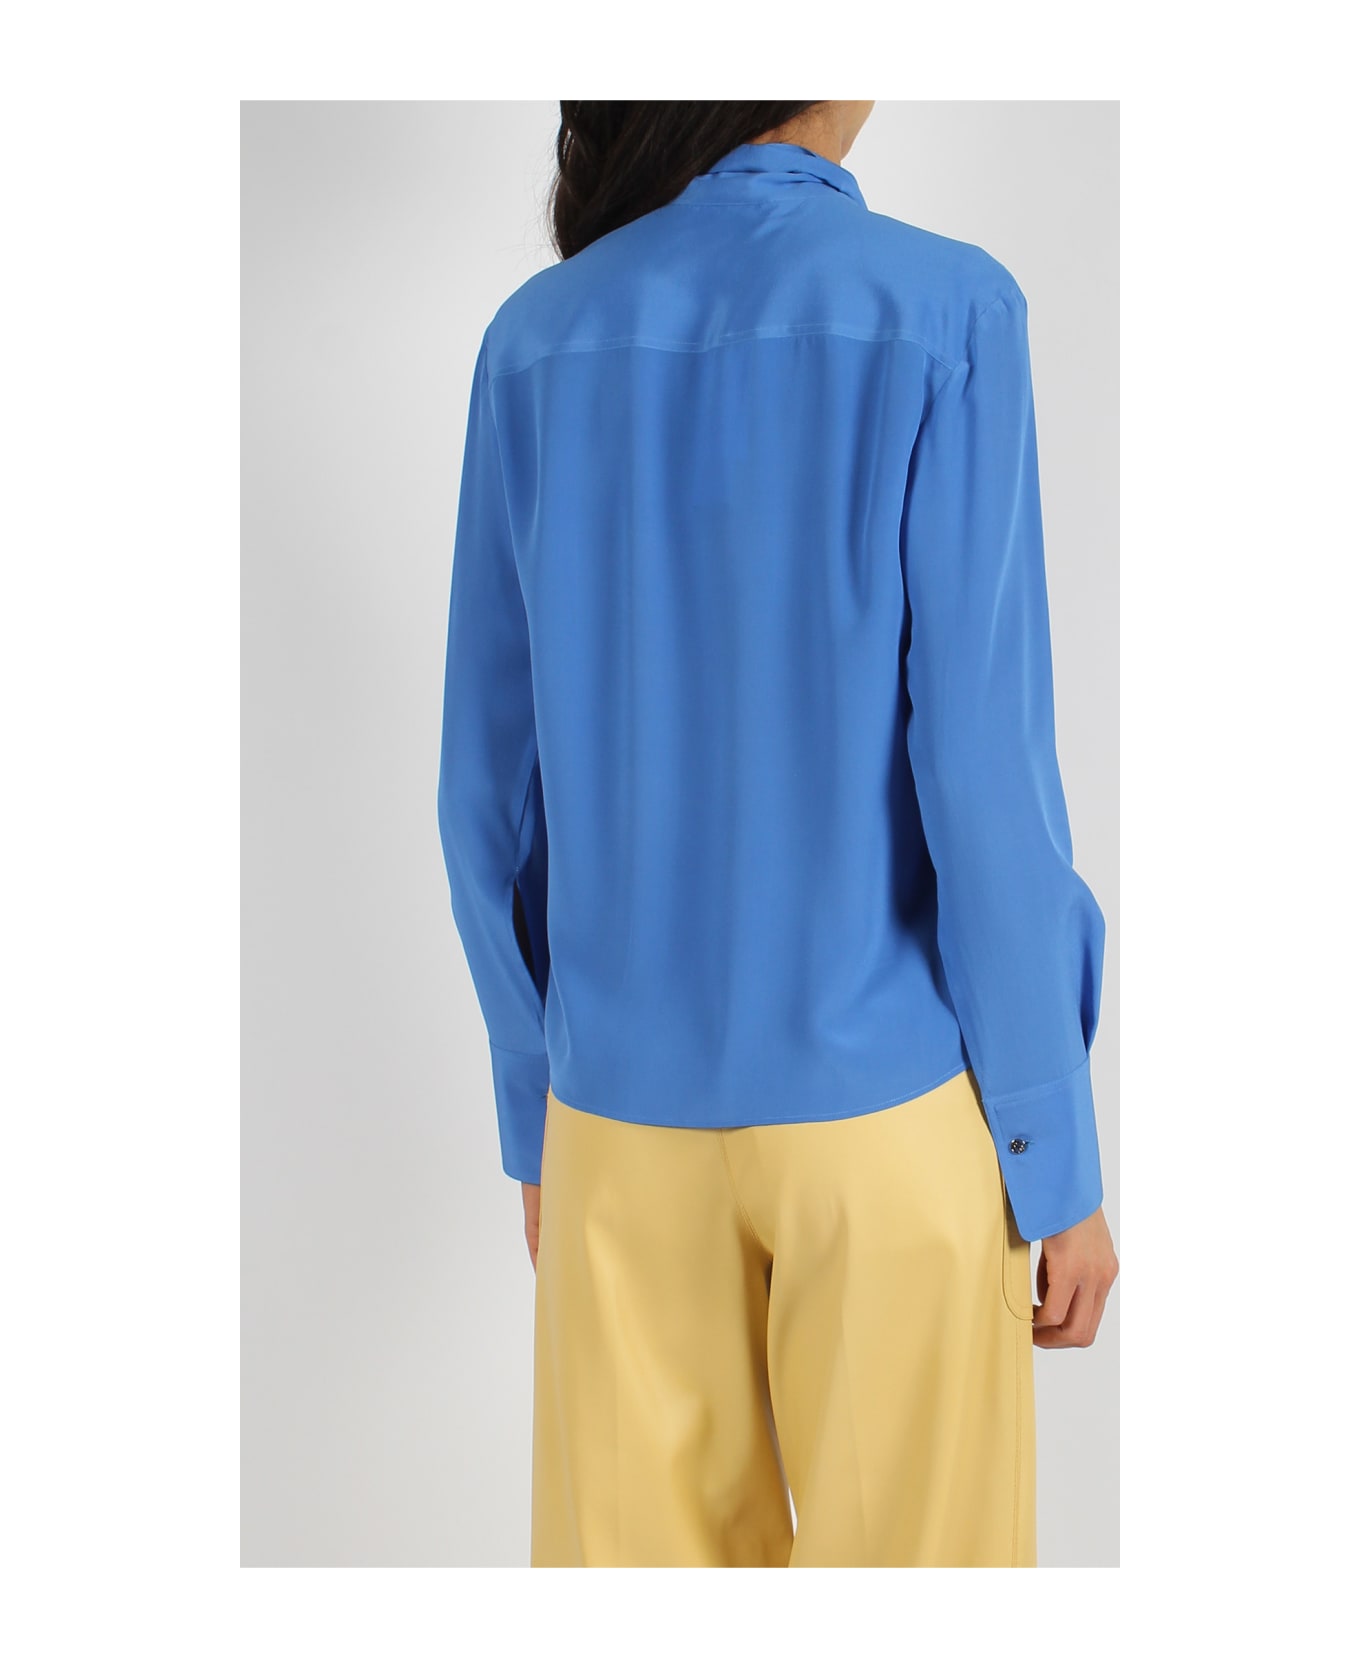 Stella McCartney Silk Crepe De Chine Pussybow Shirt - Blue